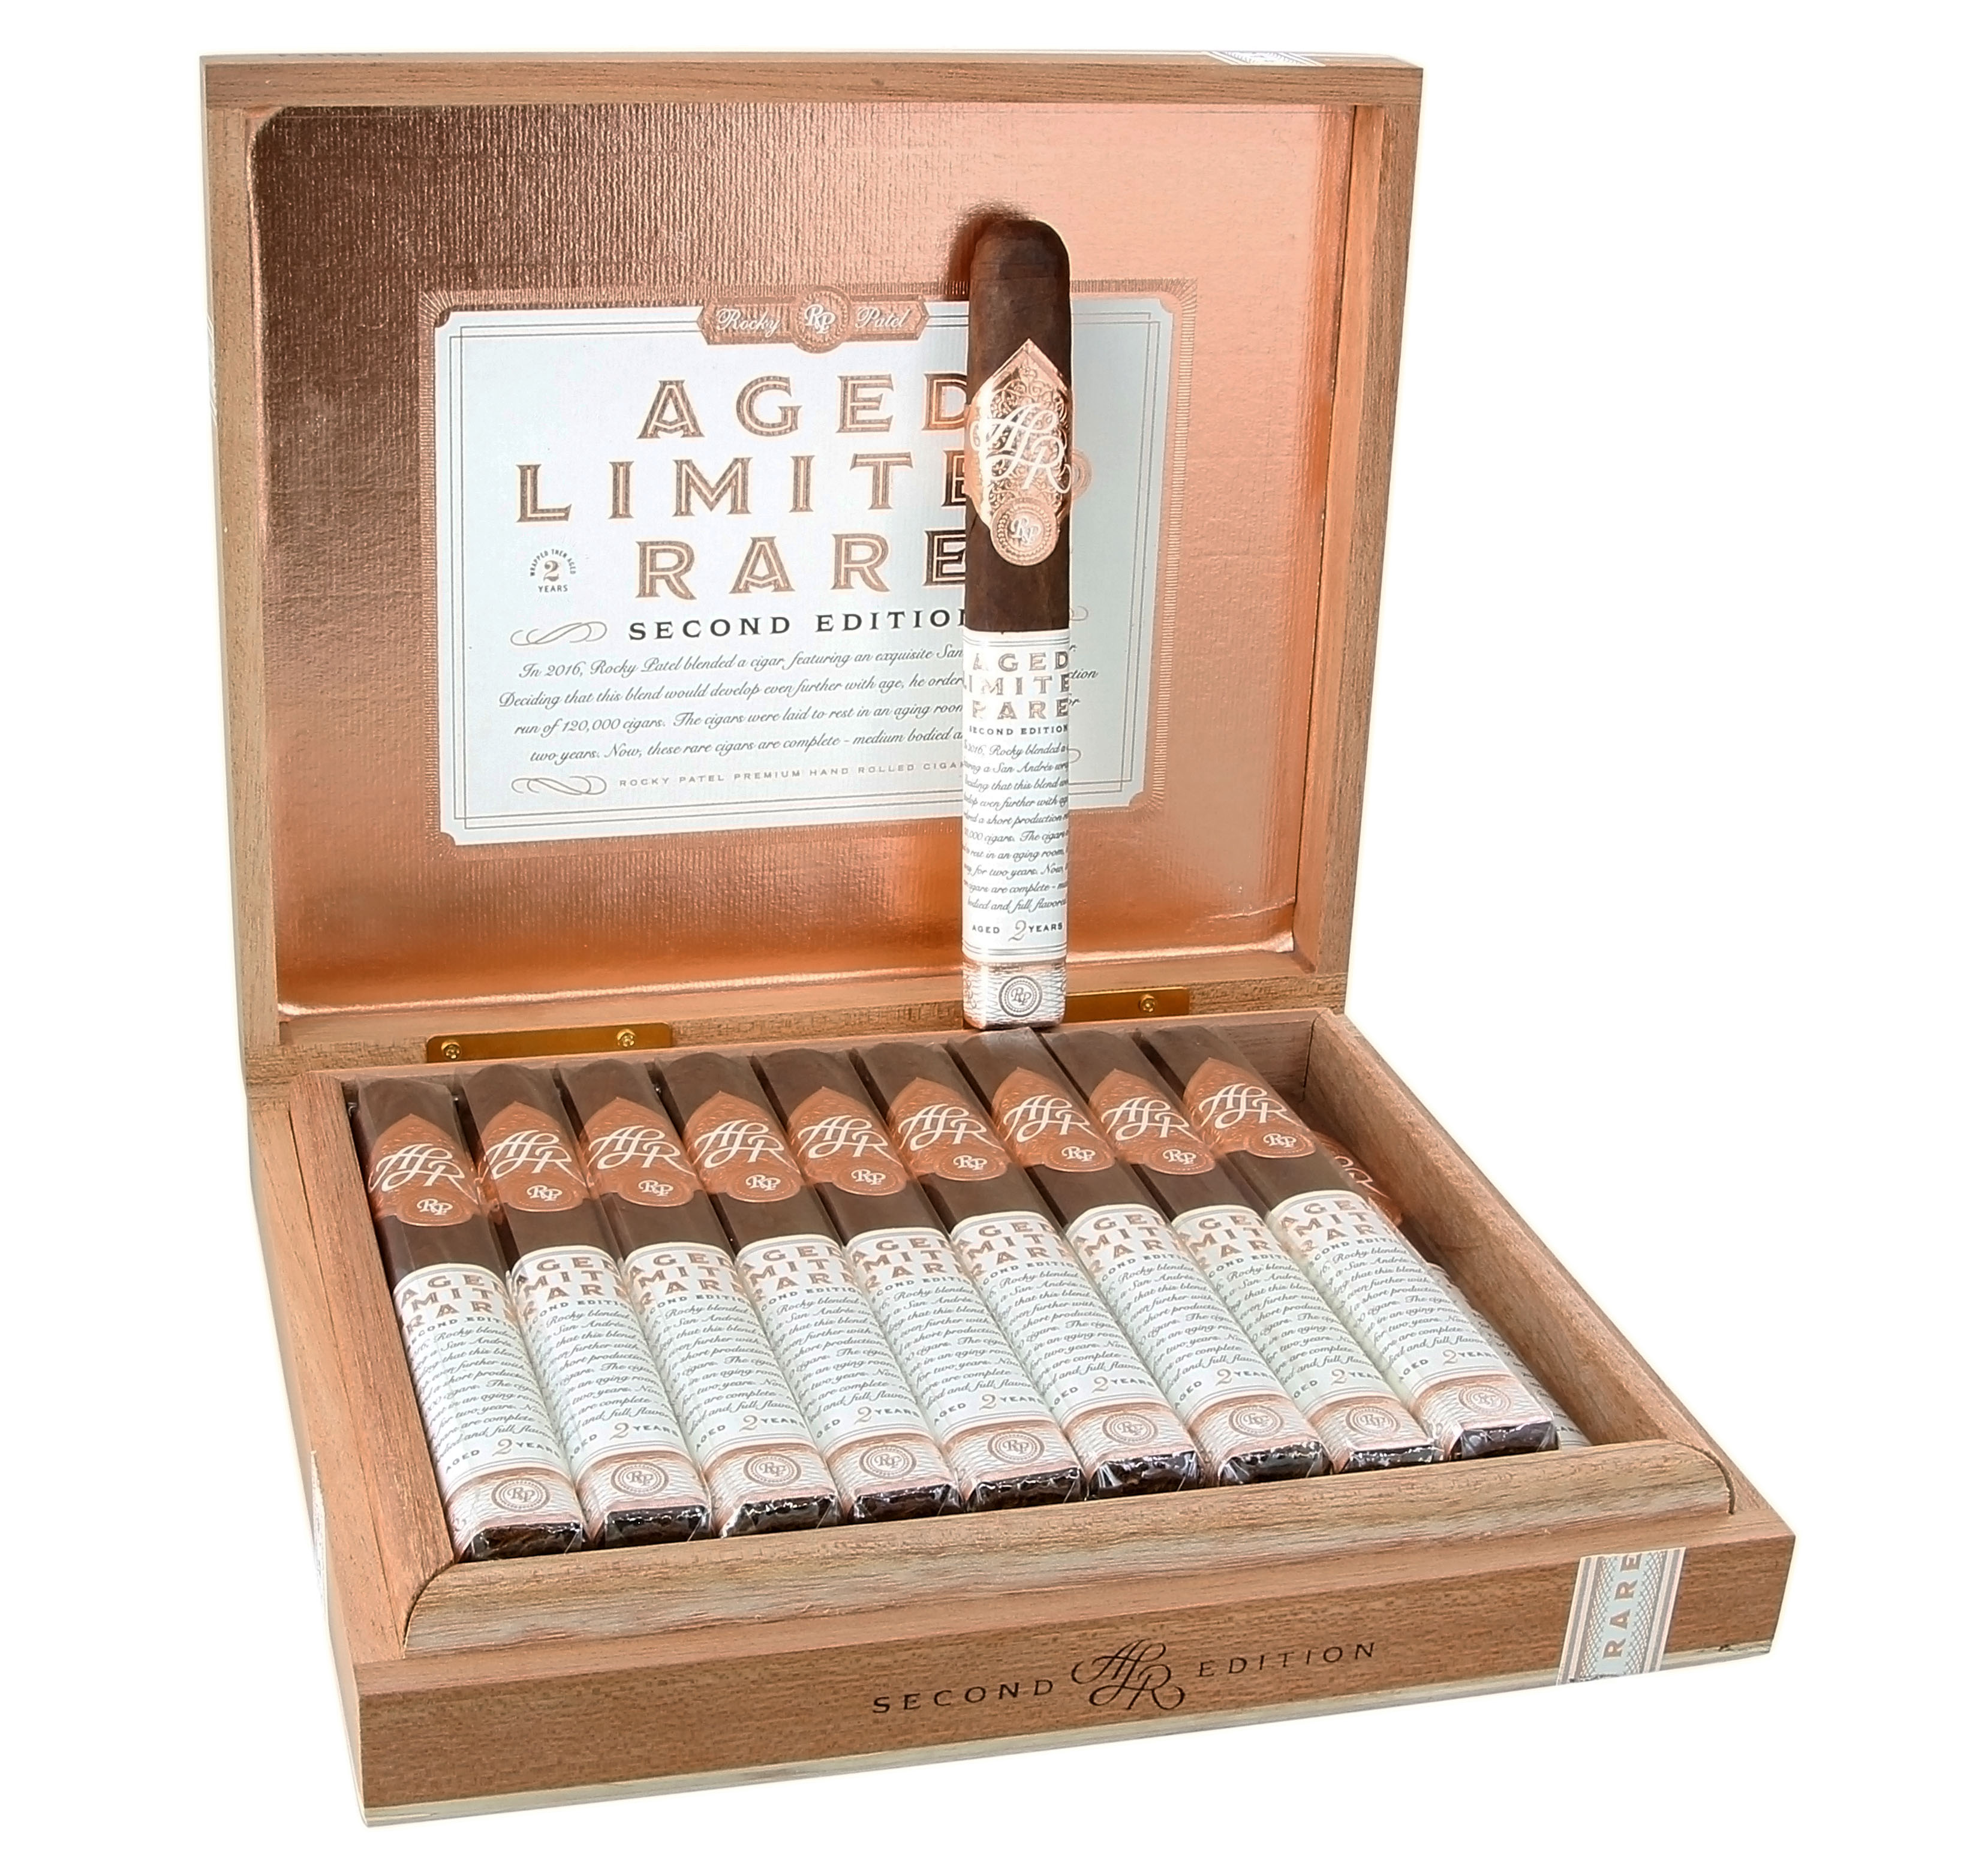 Party Case Series - Rocky Patel Premium Cigars